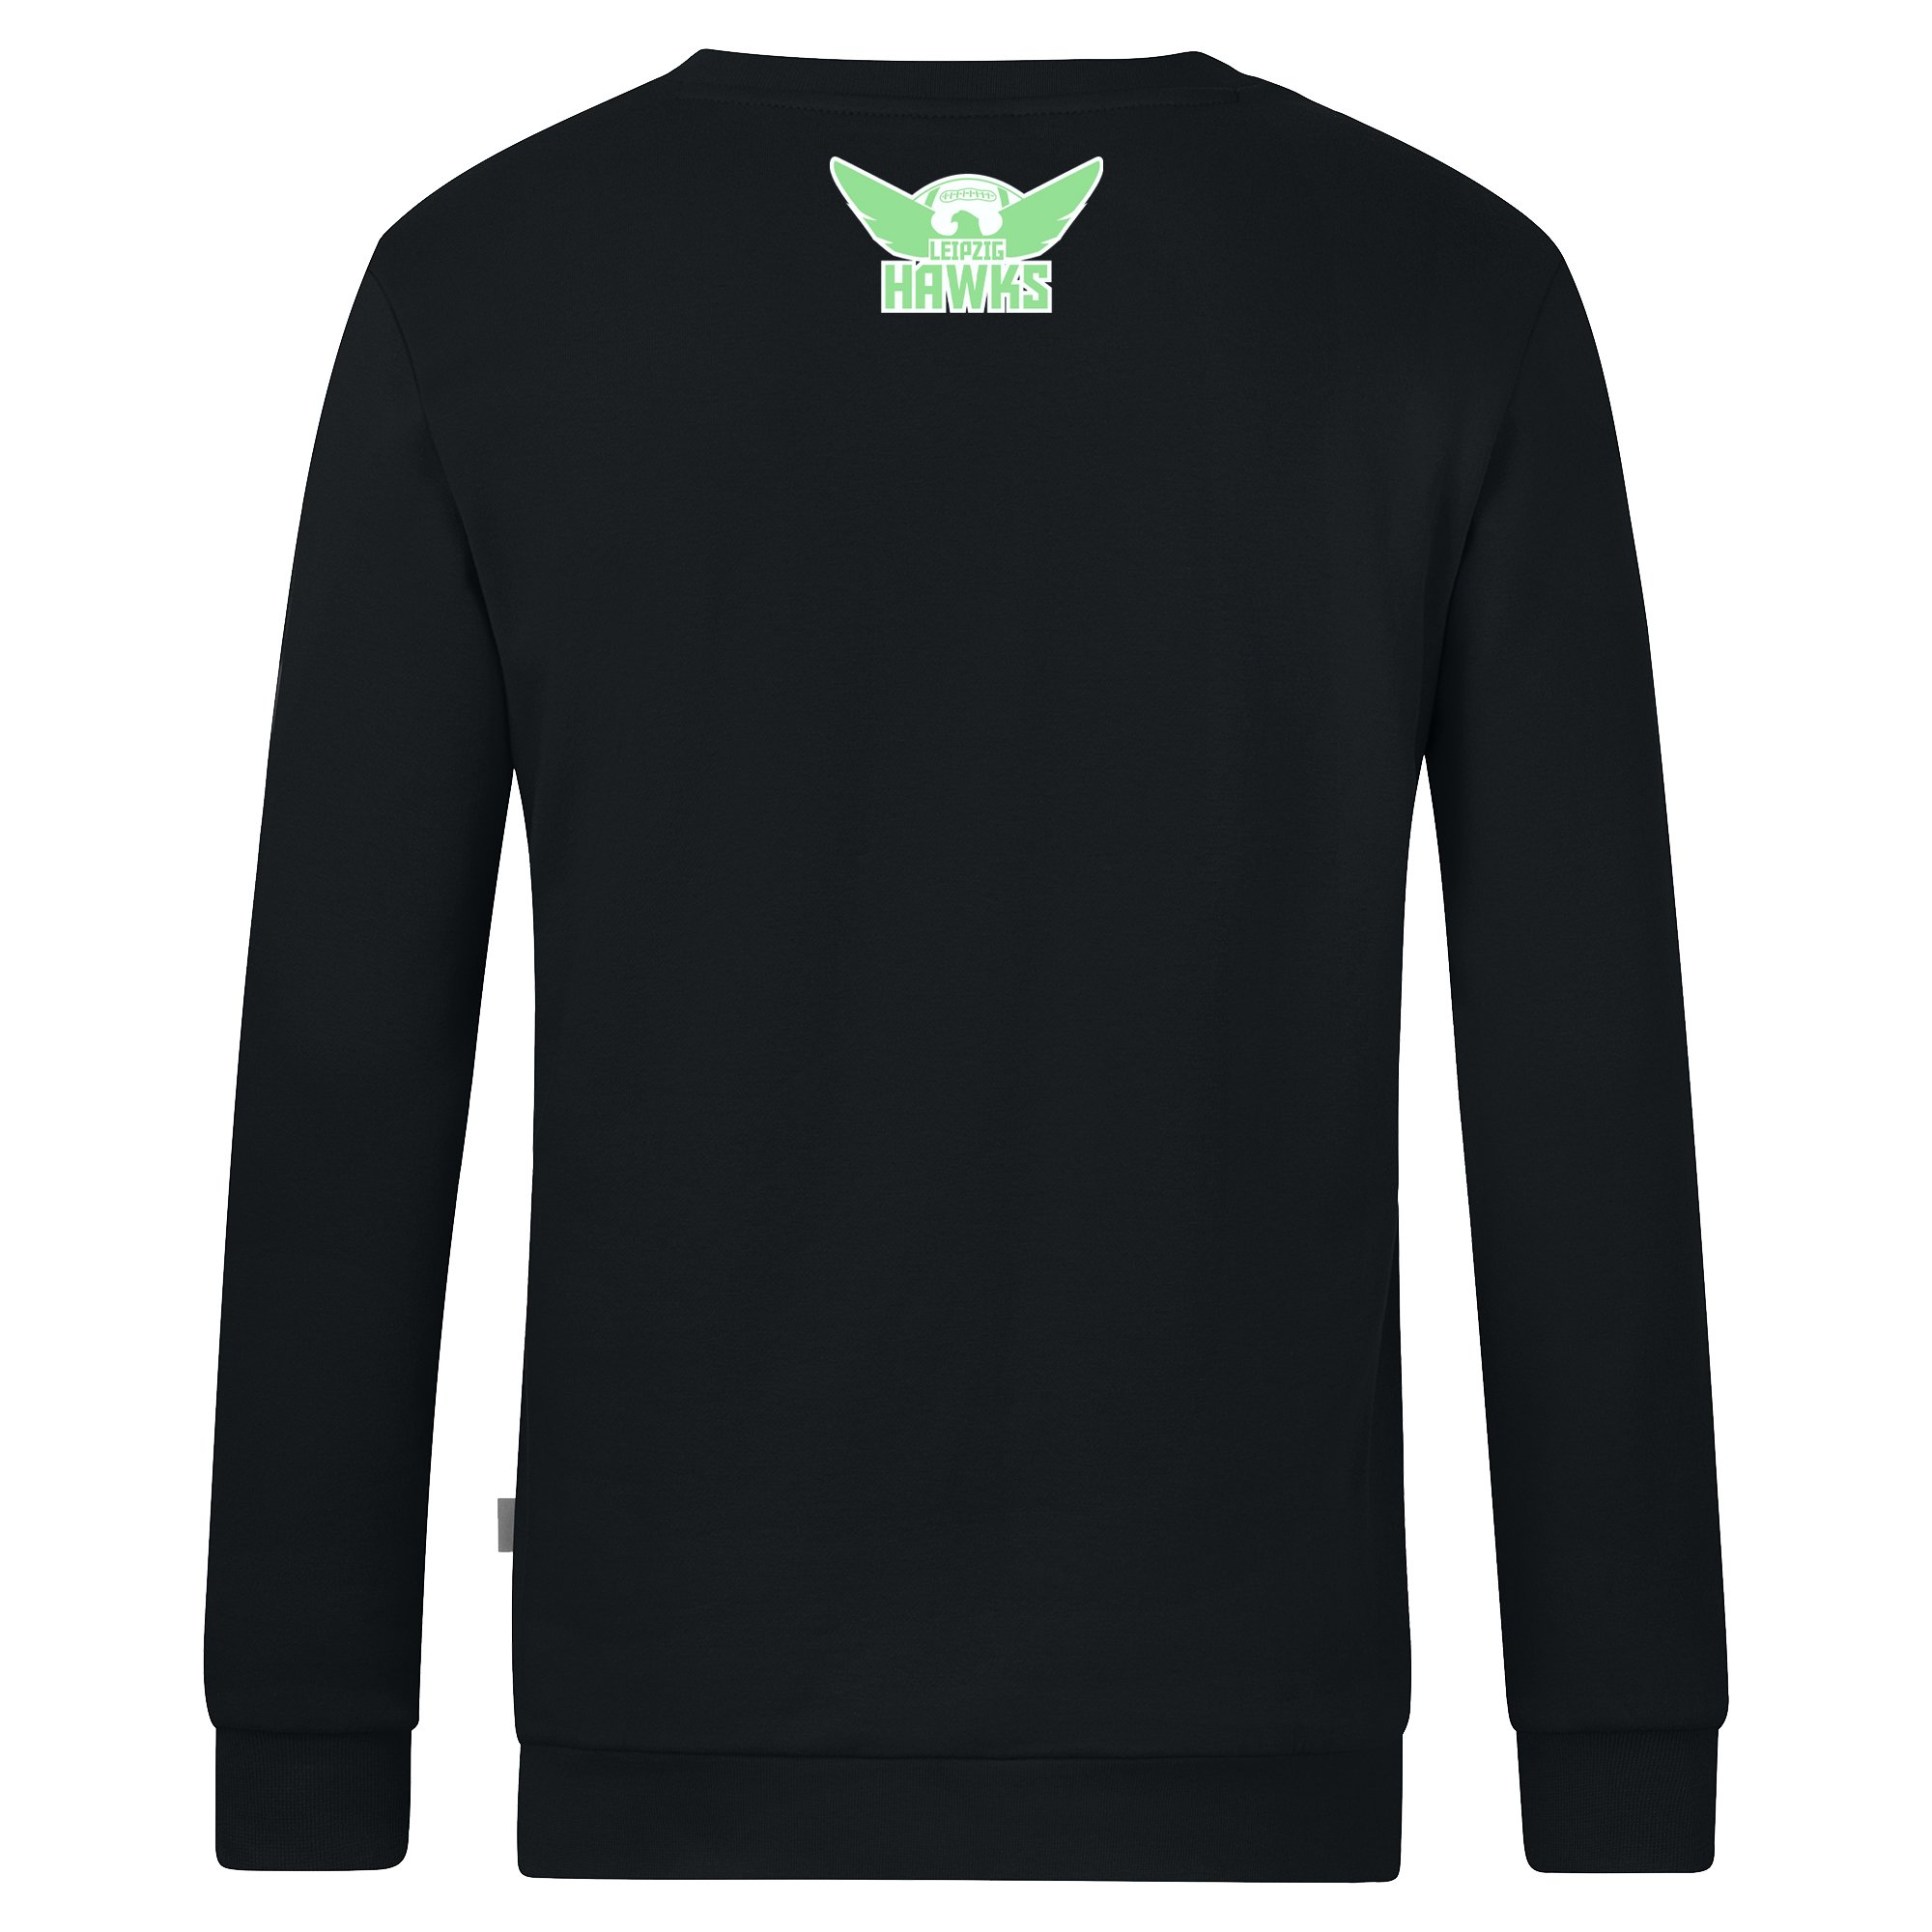 Leipzig Hawks Organic Sweatshirt